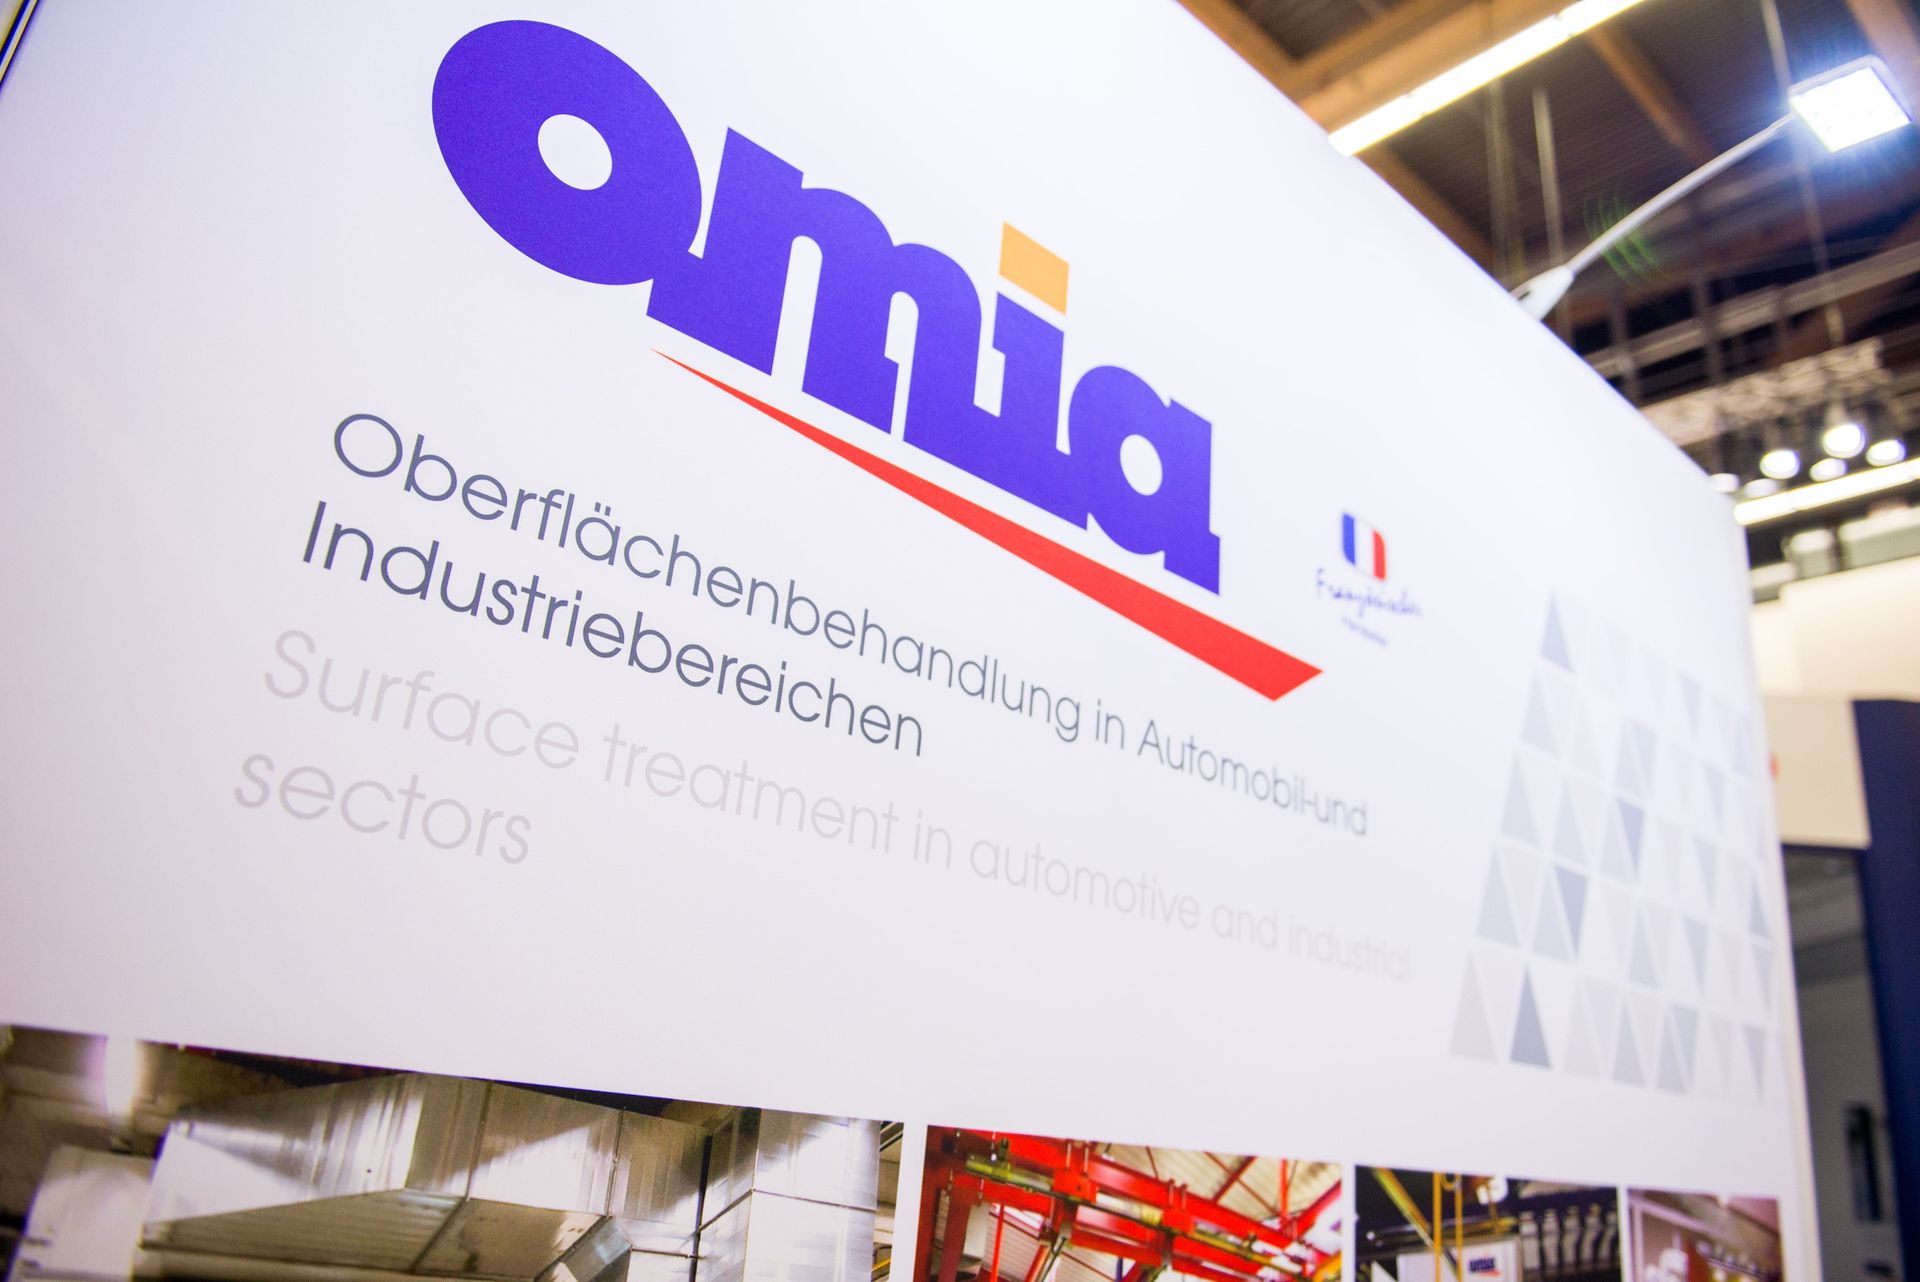 OMIA logo at trade show booth